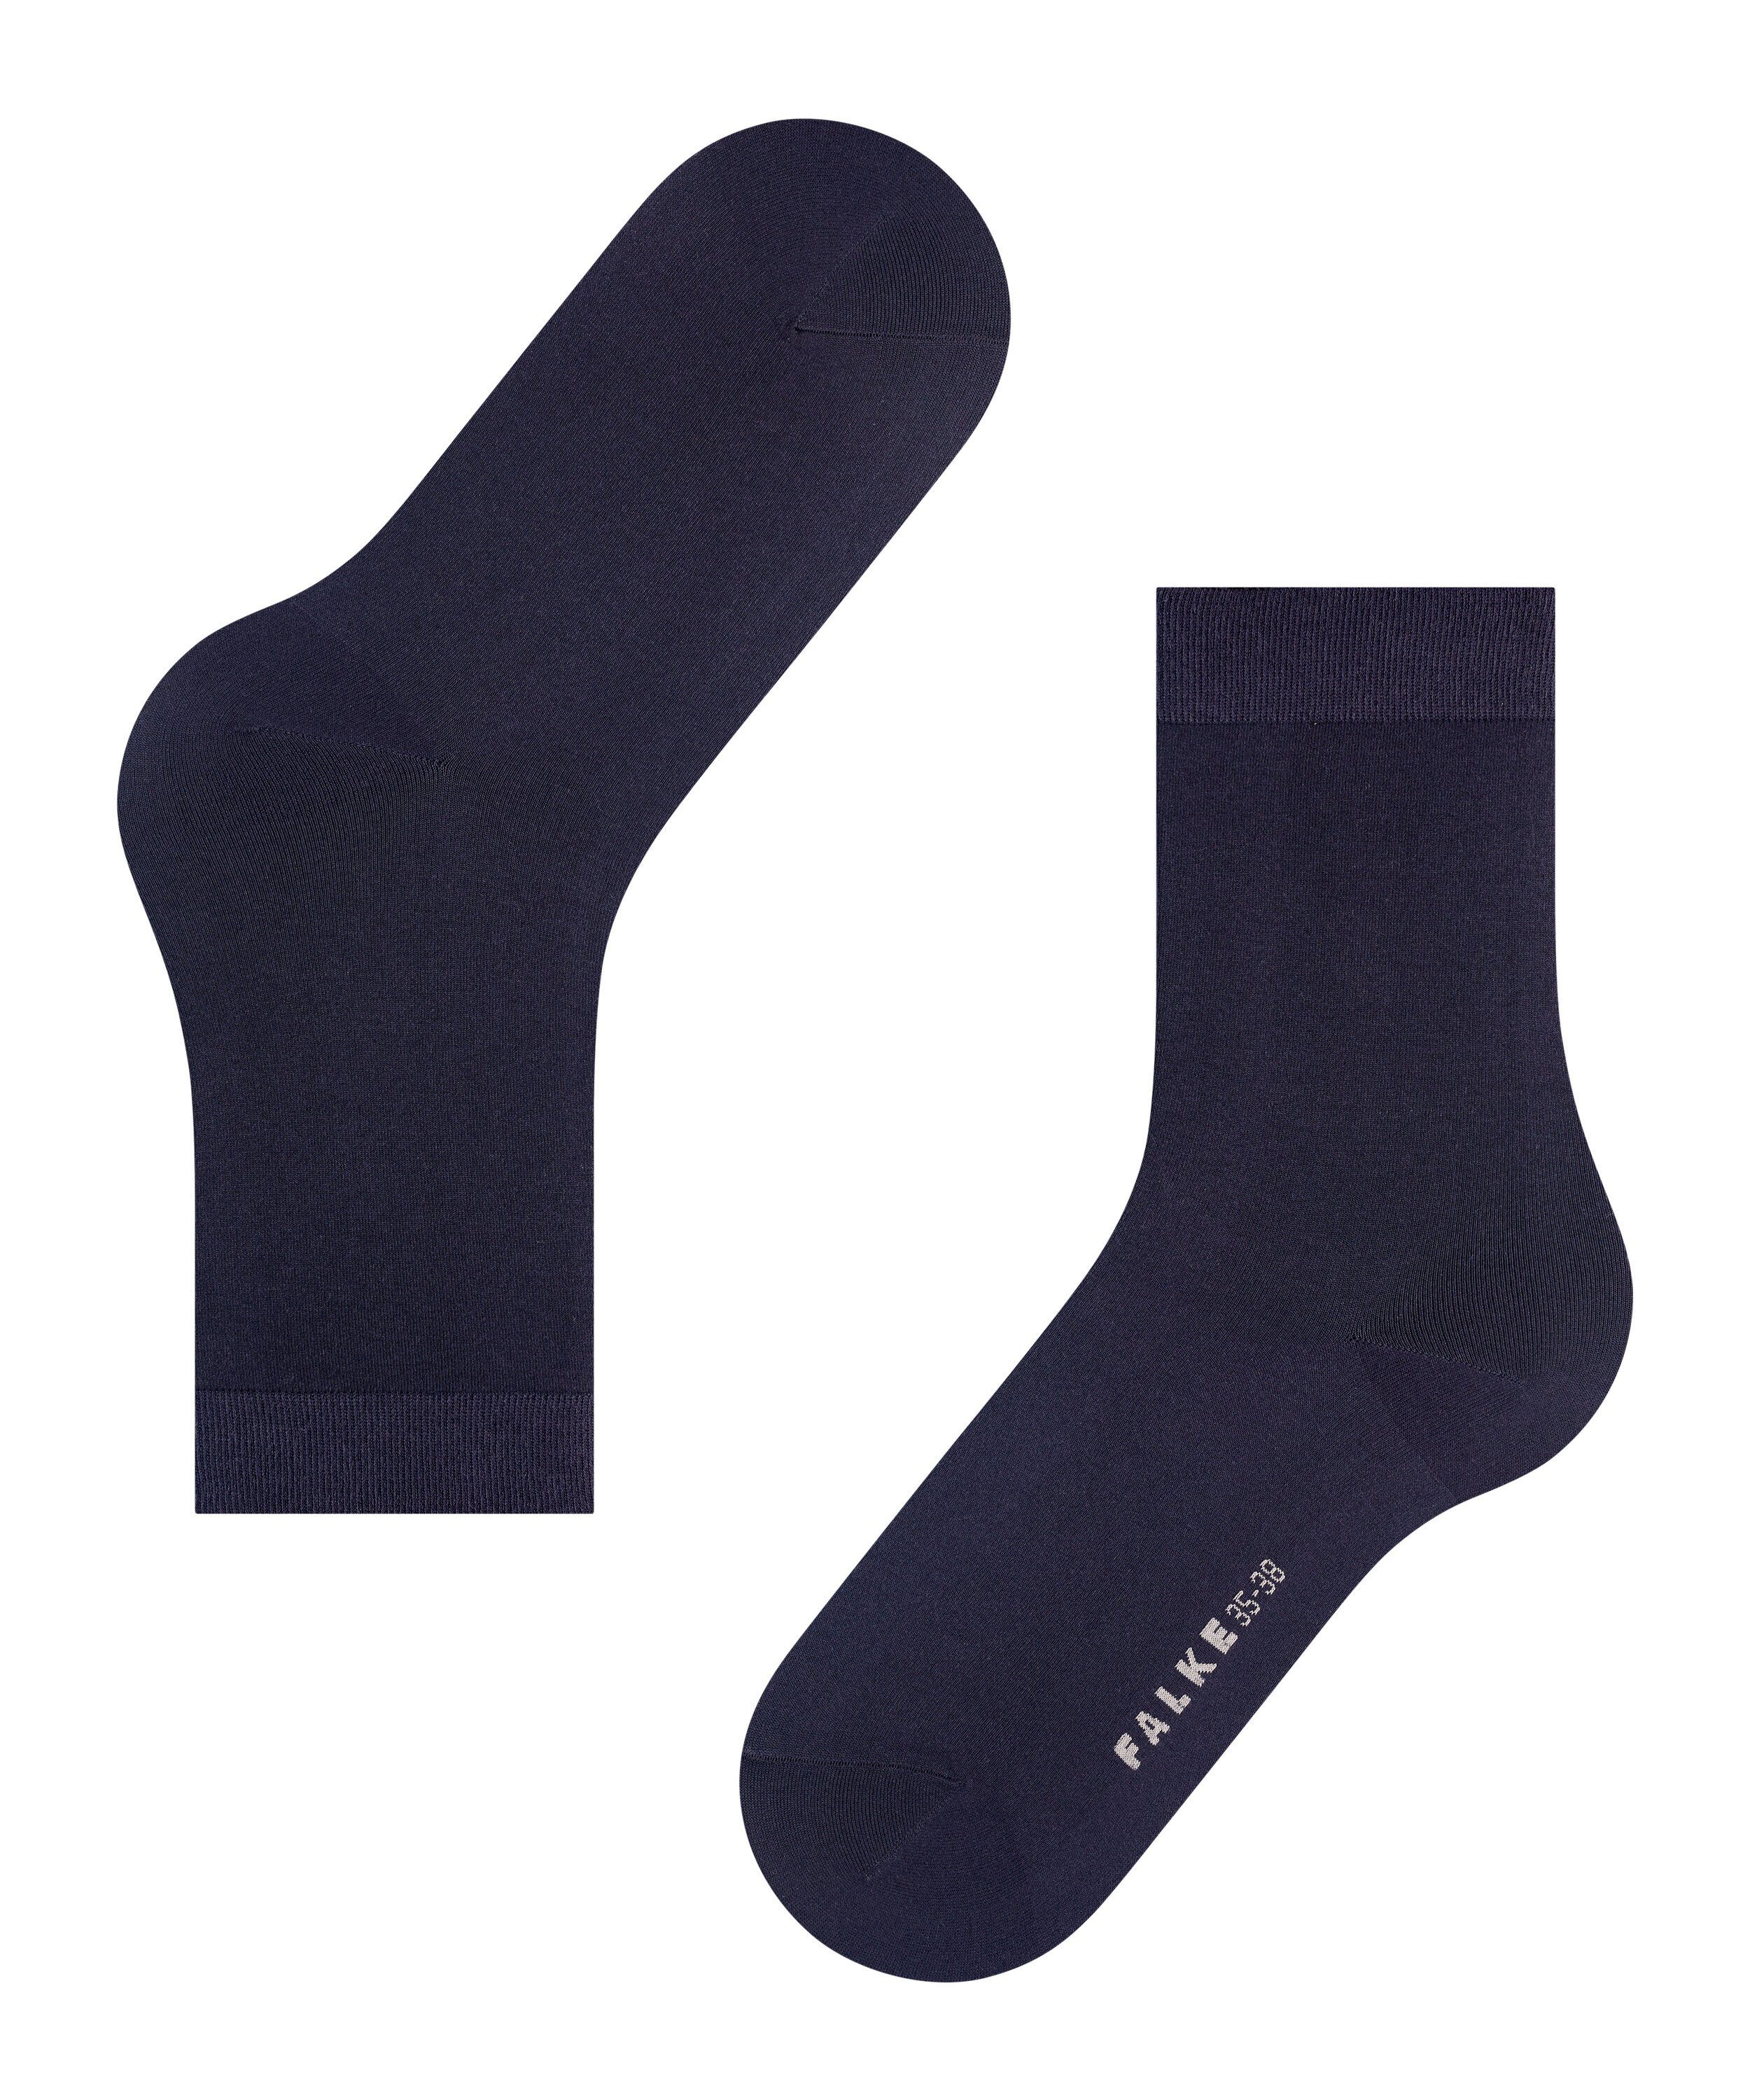 FALKE Socken Cotton Touch navy dark (6379) (1-Paar)